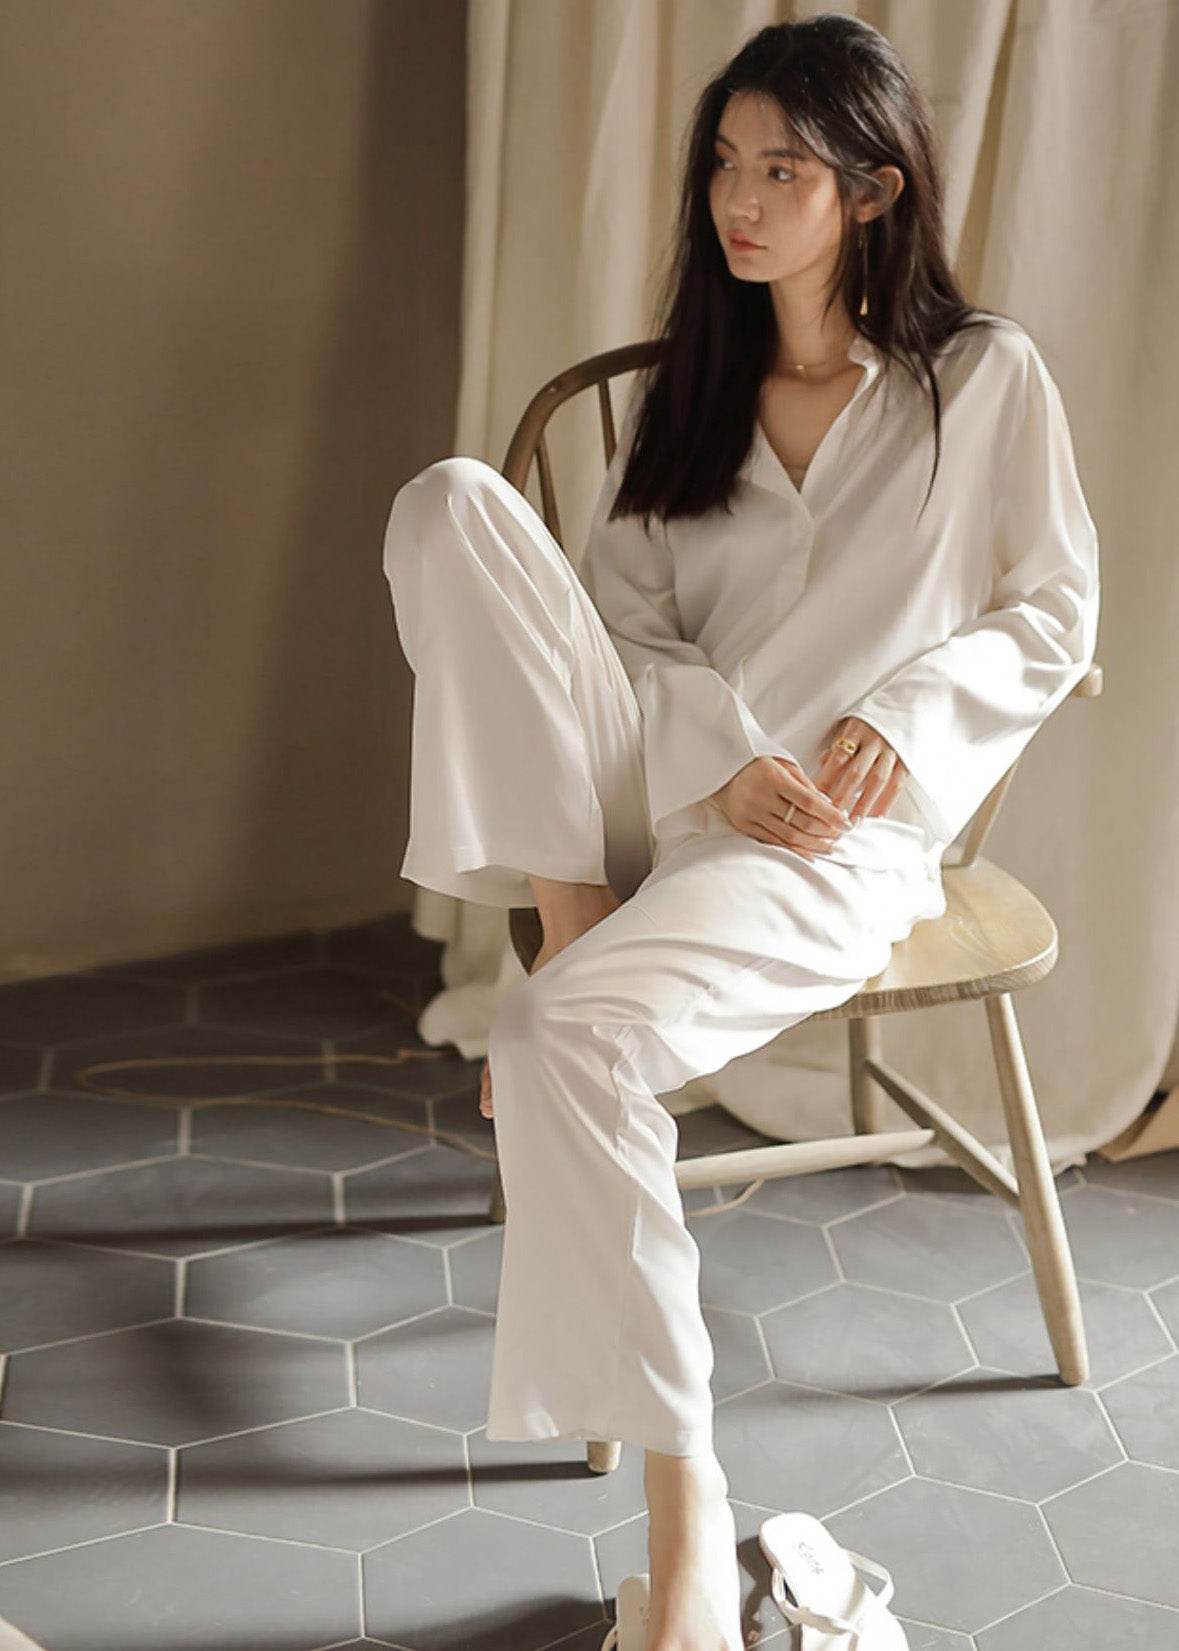 Elegant White Peter Pan Collar Button Solid Ice Silk Pajamas Two Piece Set Spring TO1040 - fabuloryshop